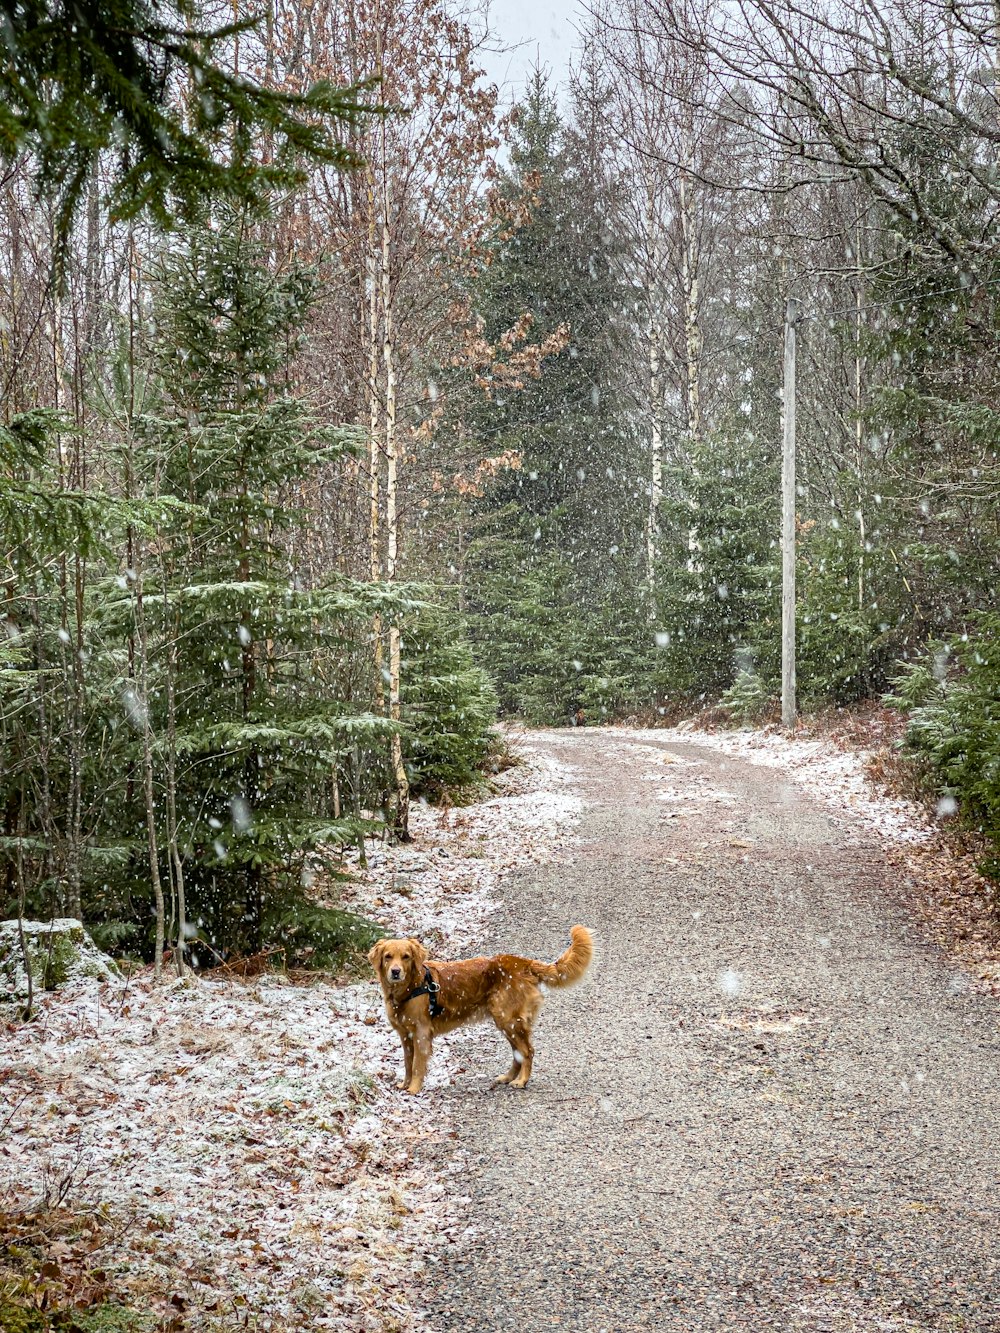 brown short coated medium sized dog walking on dirt road during daytime